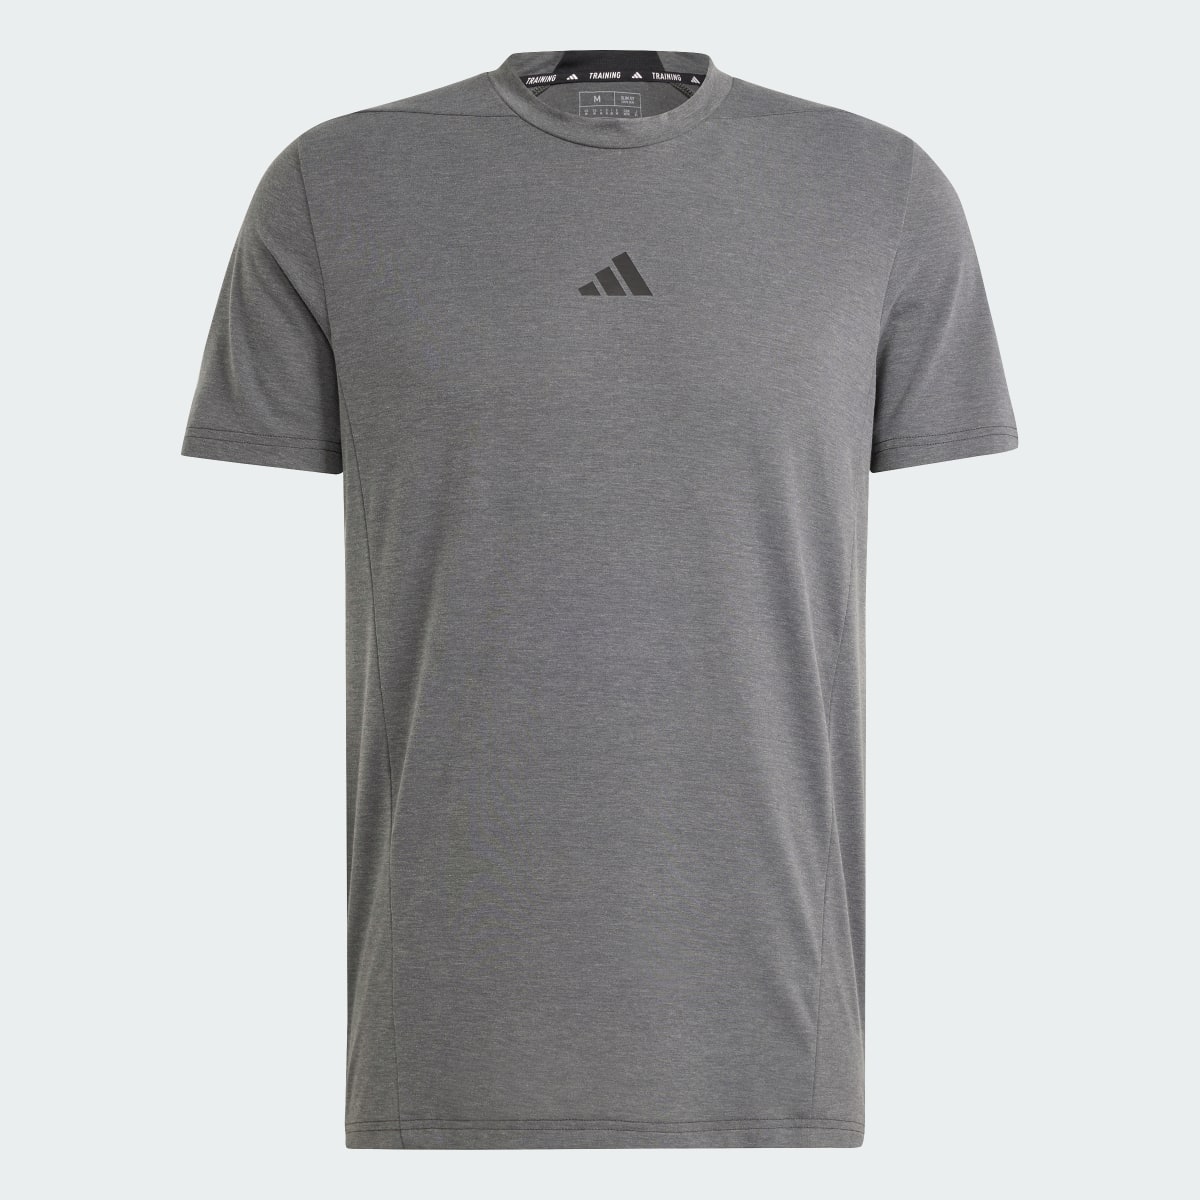 Adidas T-shirt Designed for Training Workout. 6